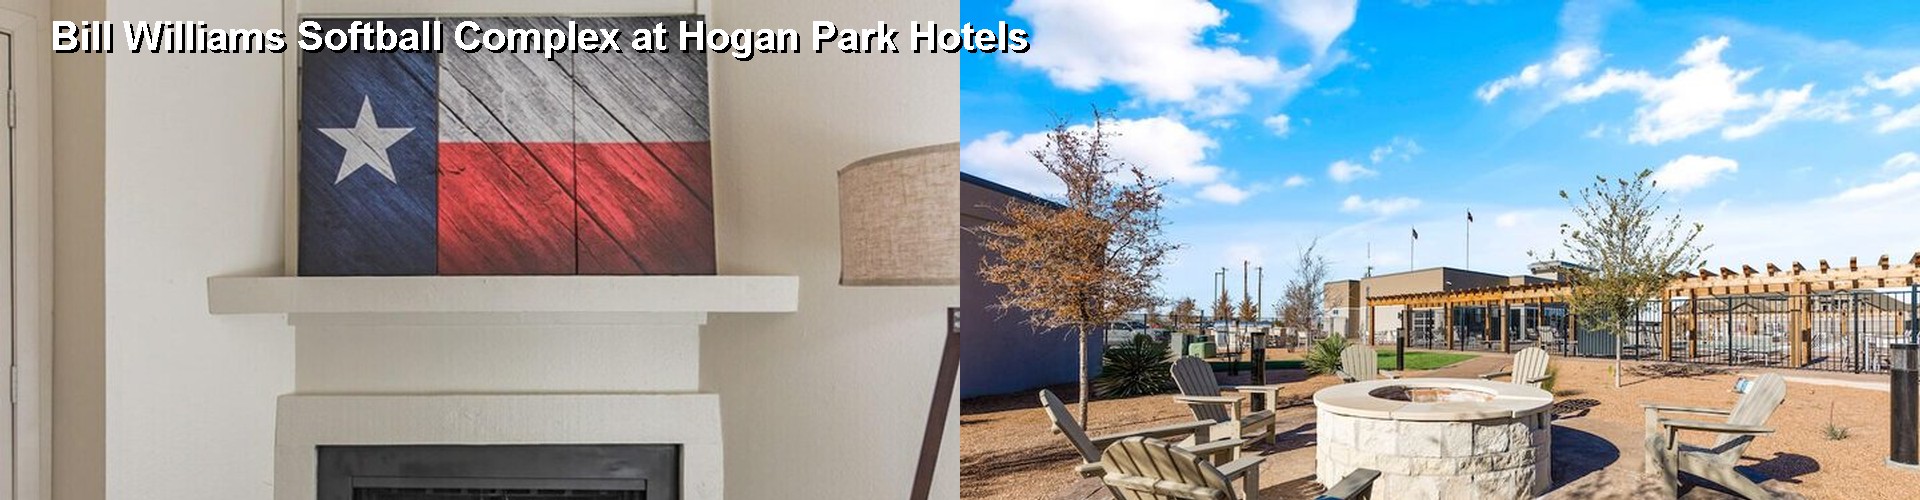 5 Best Hotels near Bill Williams Softball Complex at Hogan Park